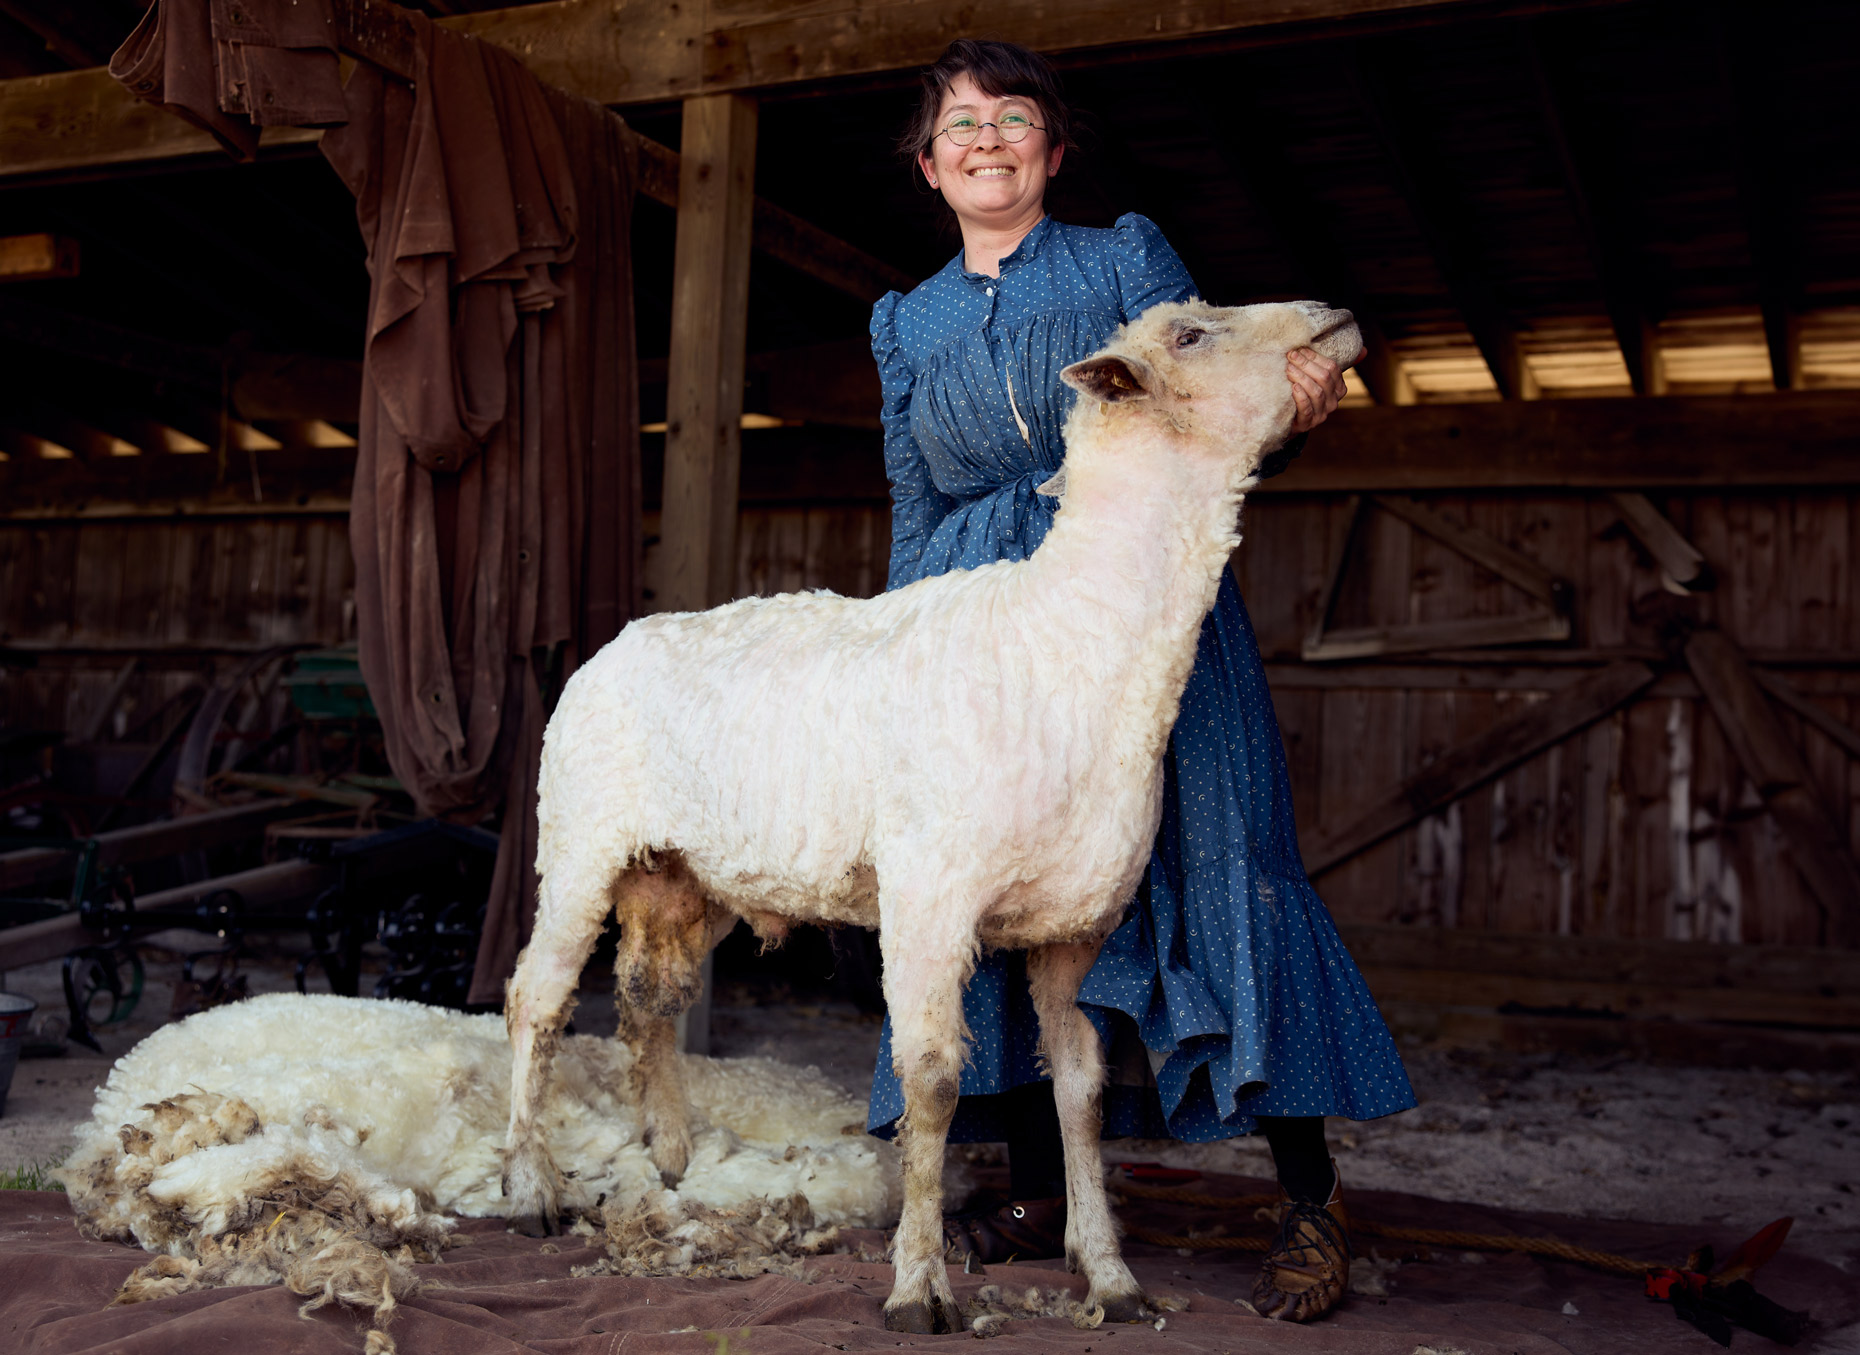 Sheep shearing | Lifestyle Portrait by Saverio Truglia